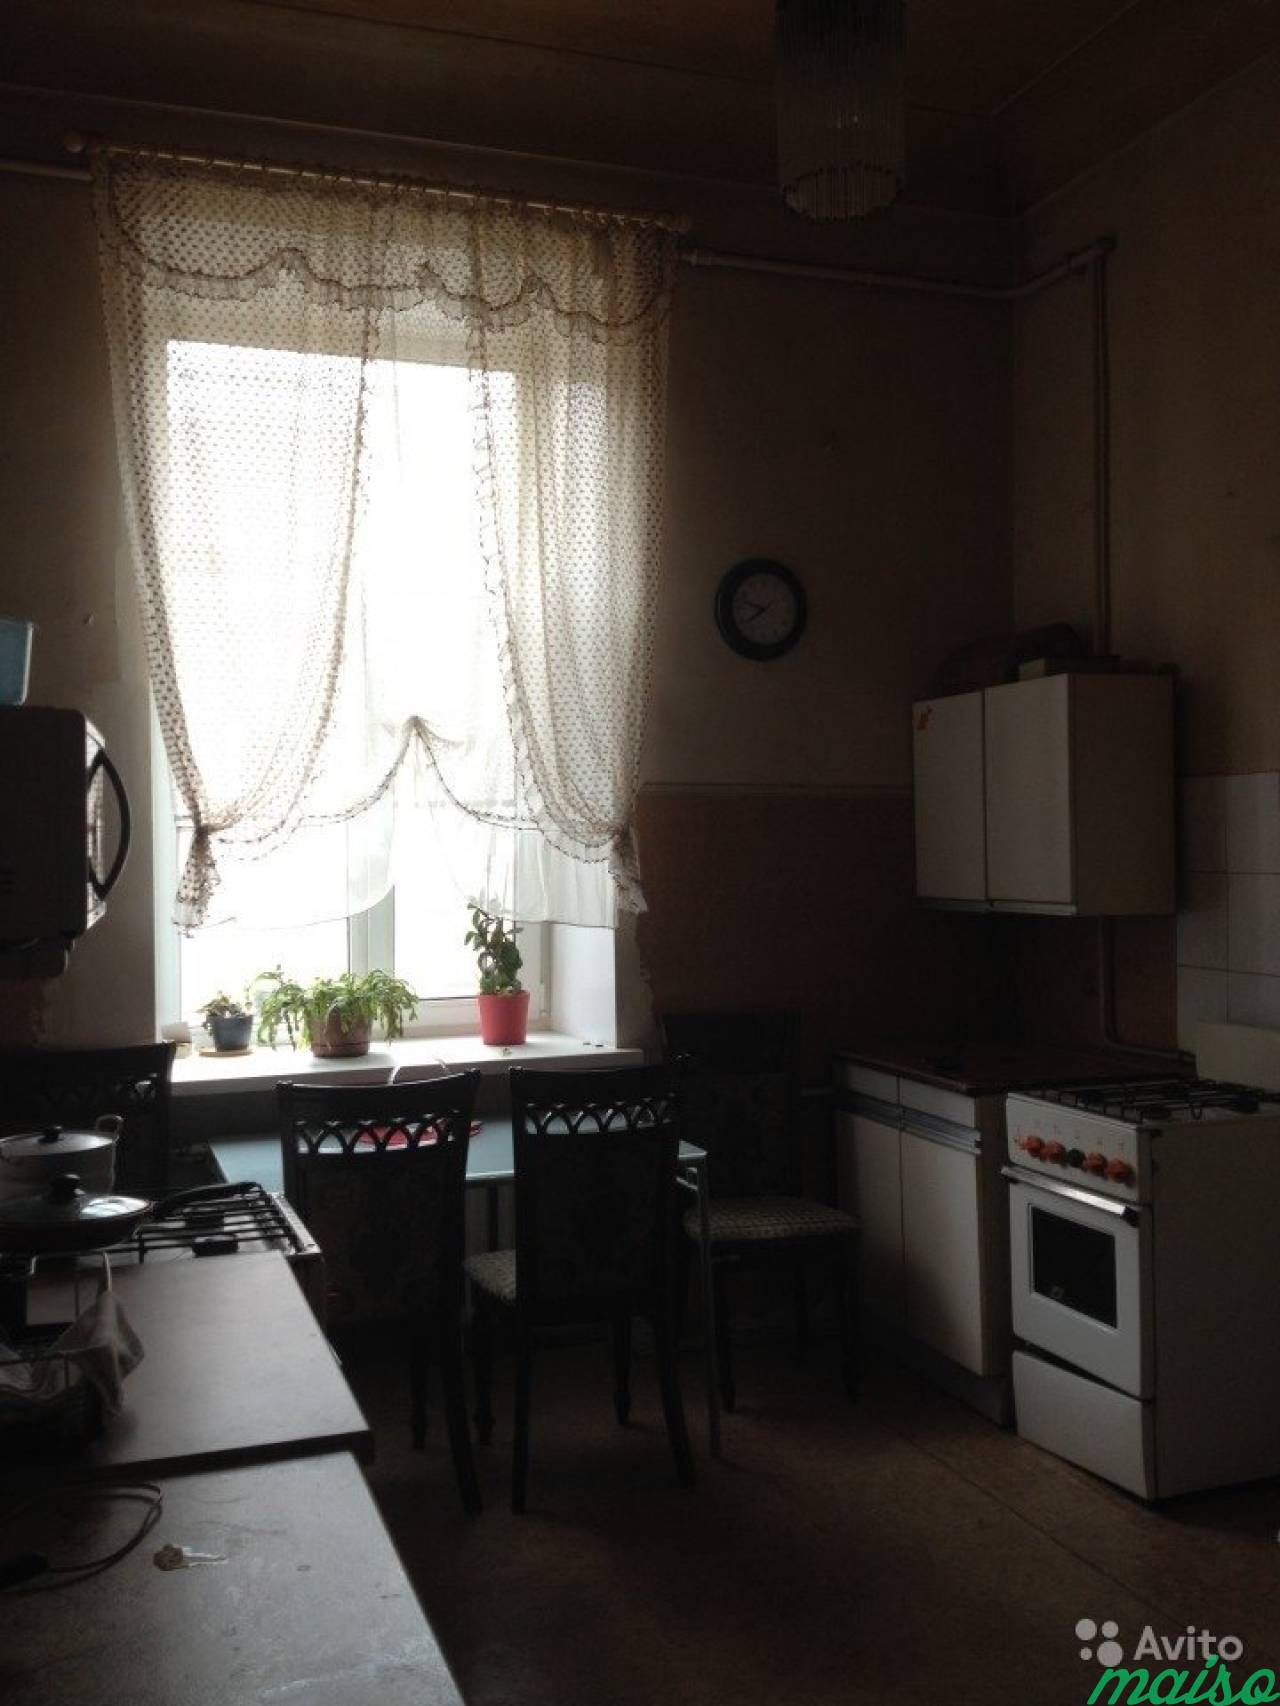 Комната 15 м² в 4-к, 2/4 эт. в Санкт-Петербурге. Фото 1